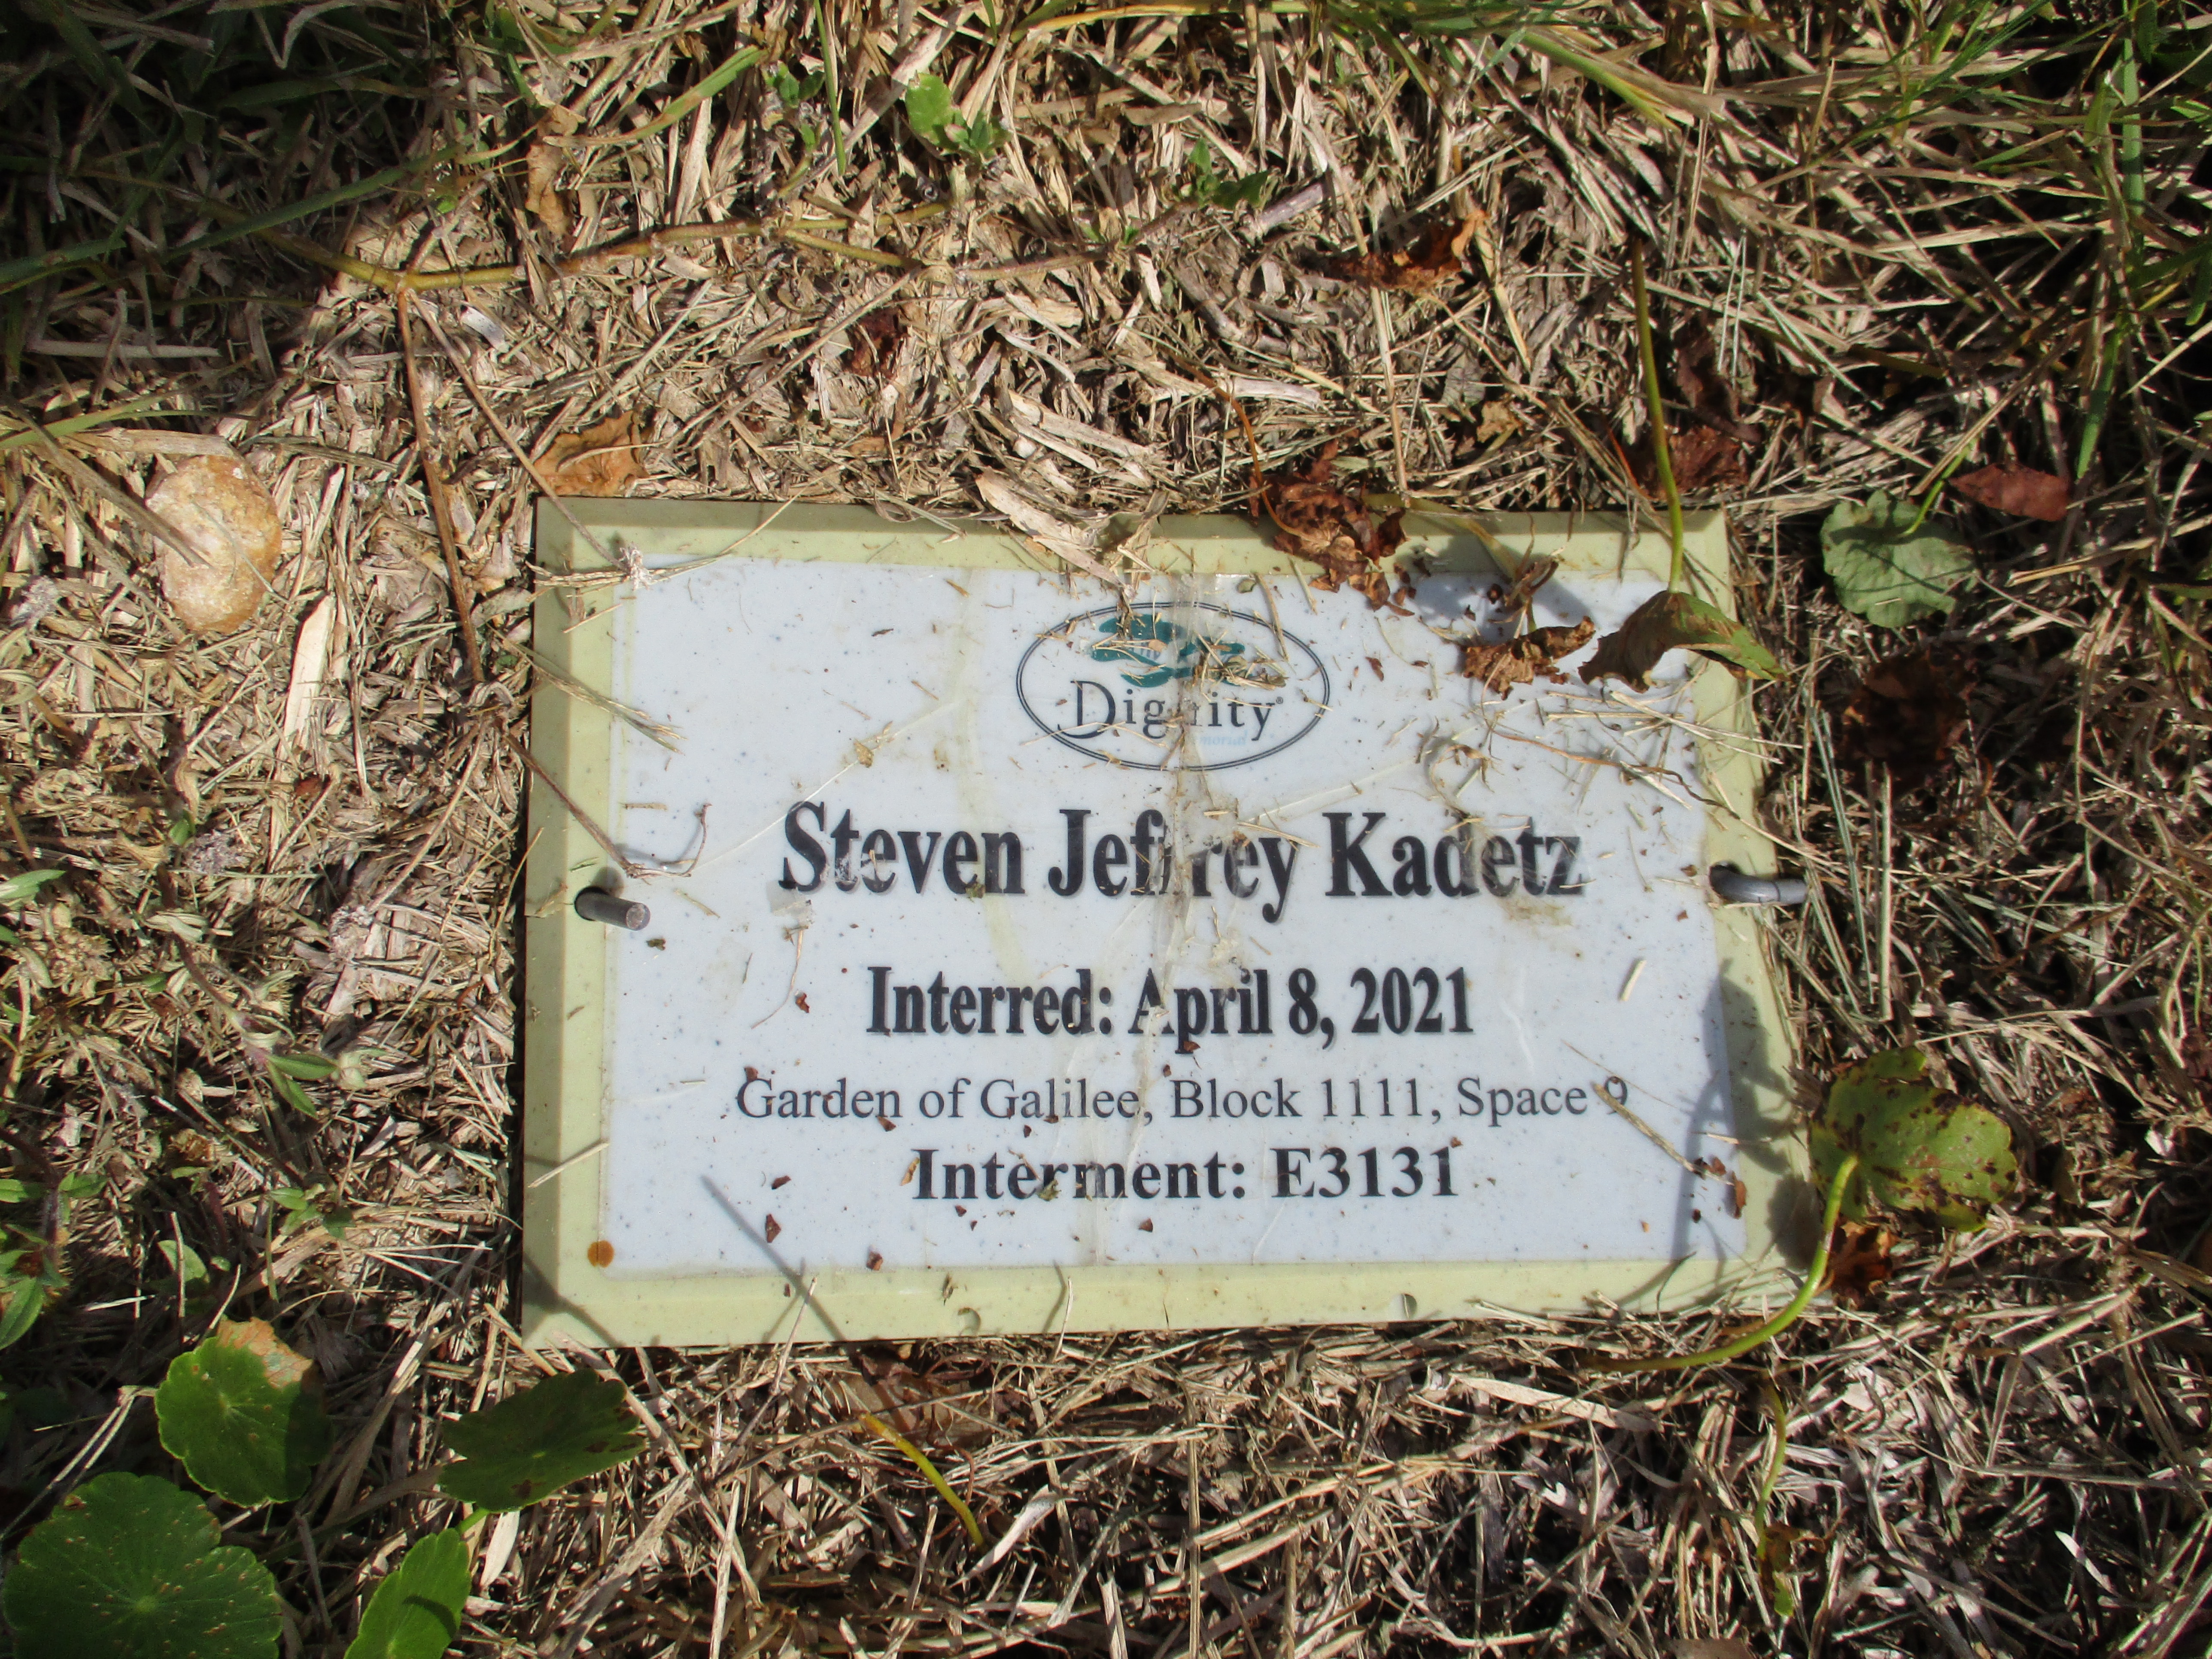 Steven Jeffrey Kadetz